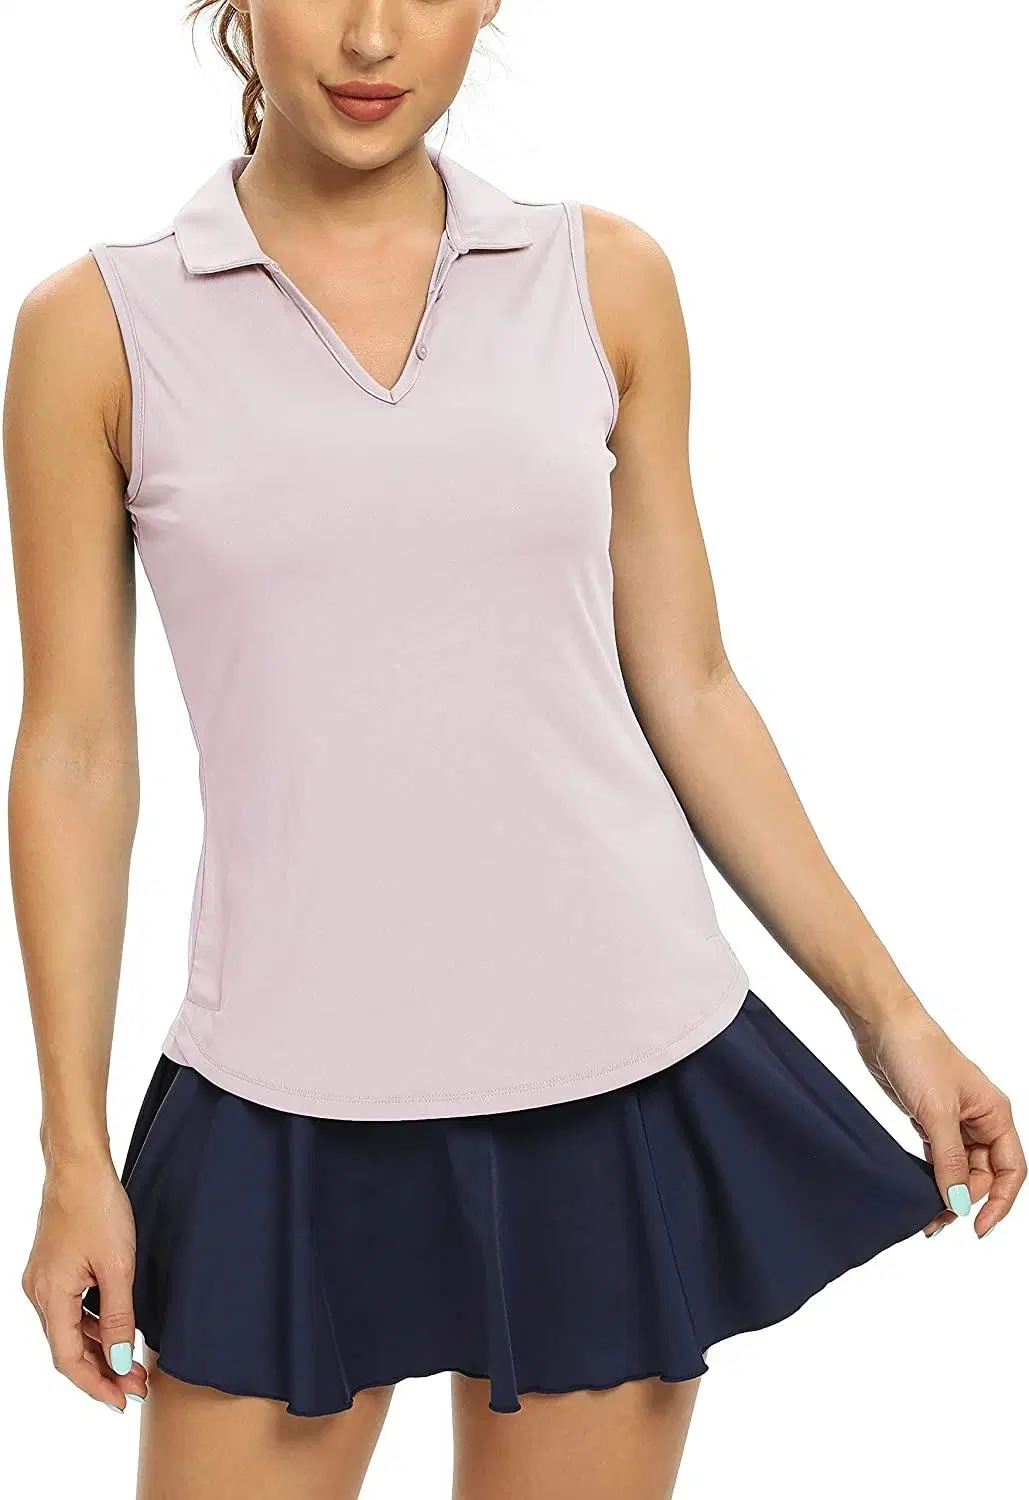 Women Sleeveless Golf Polo Shirts V-Neck Sports Athletic Tennis Tank Tops